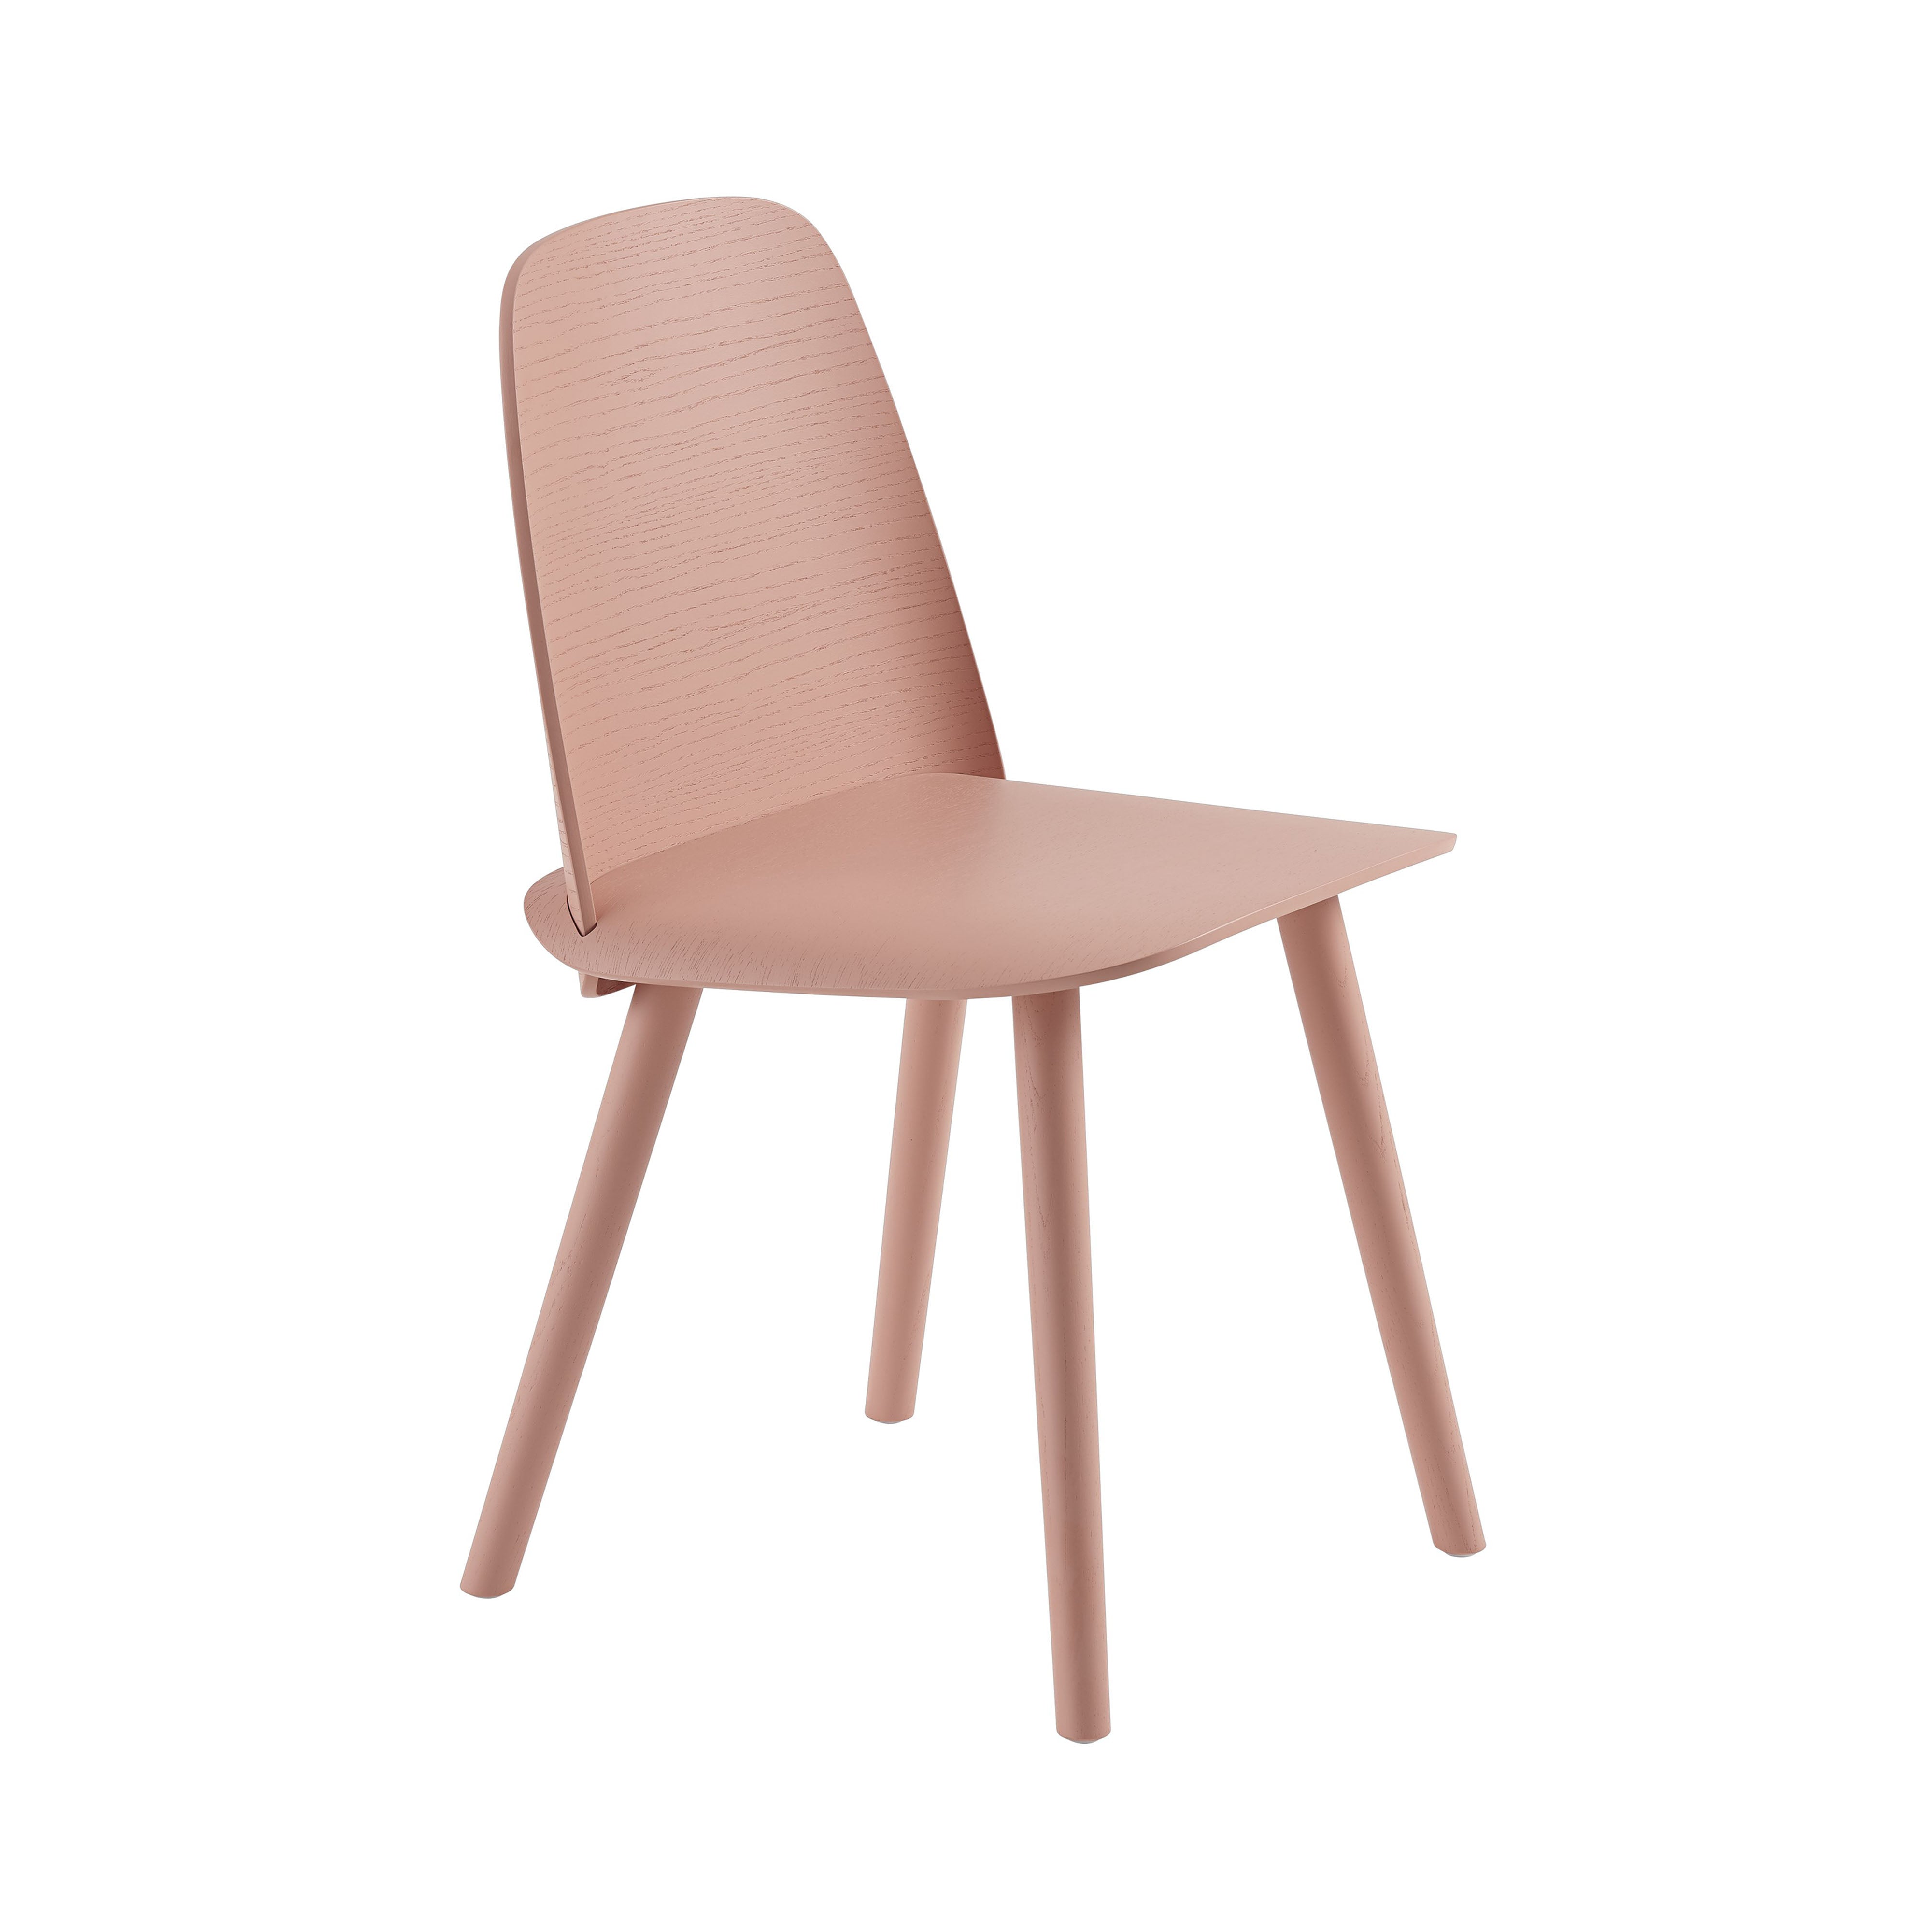 Nerd Chair: Tan Rose